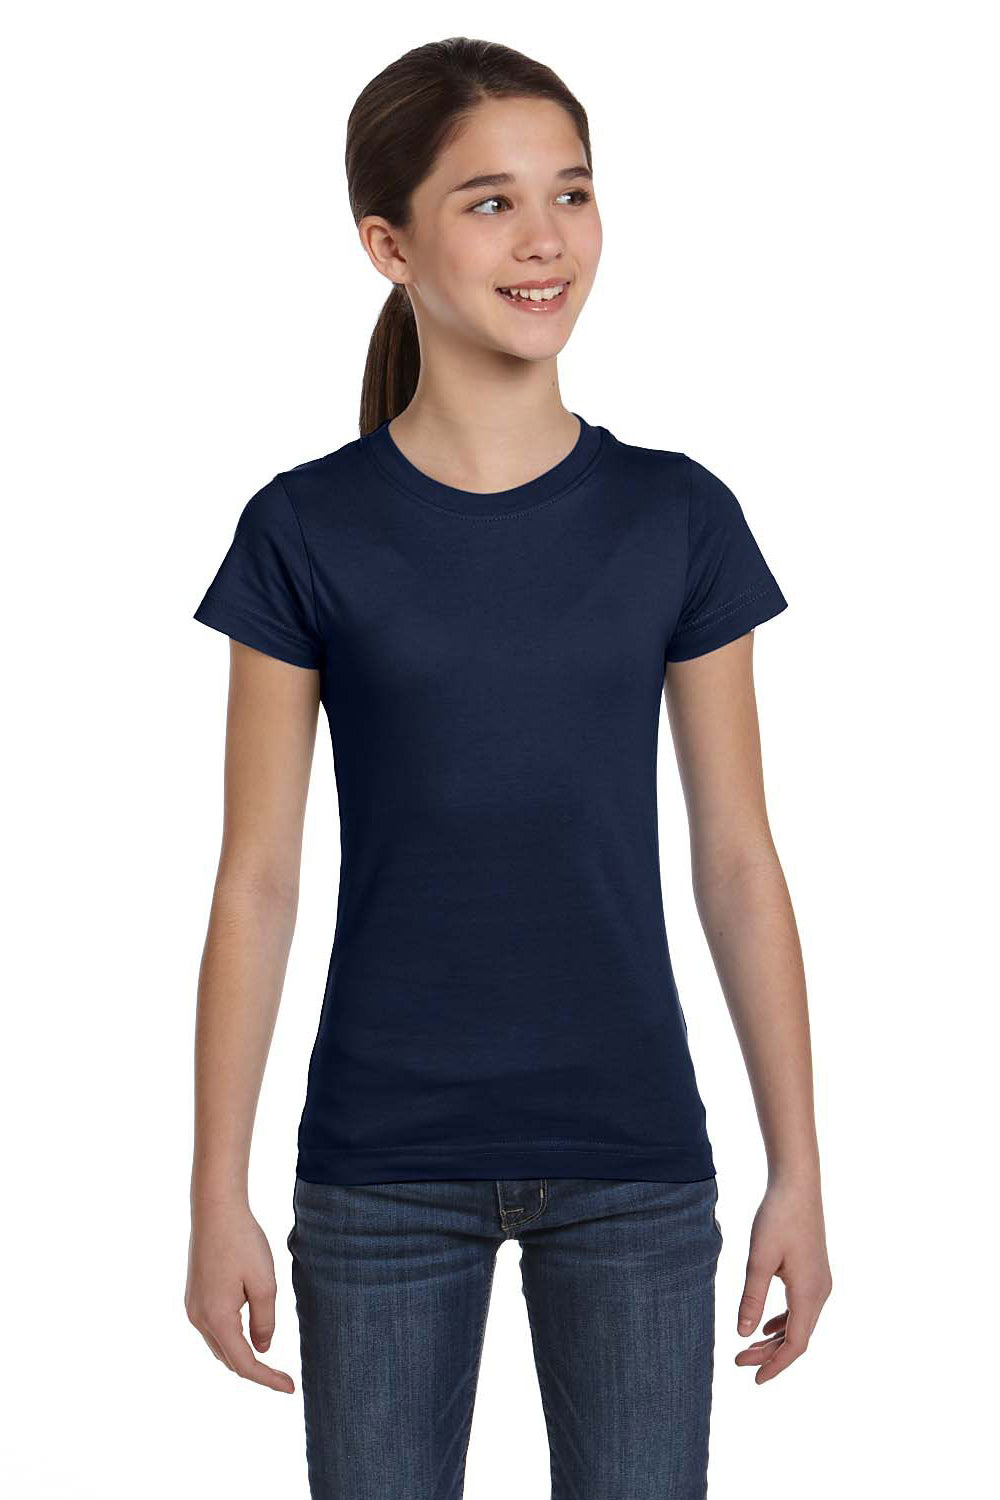 LAT 2616 Youth Fine Jersey Short Sleeve Crewneck T-Shirt Navy Blue Front